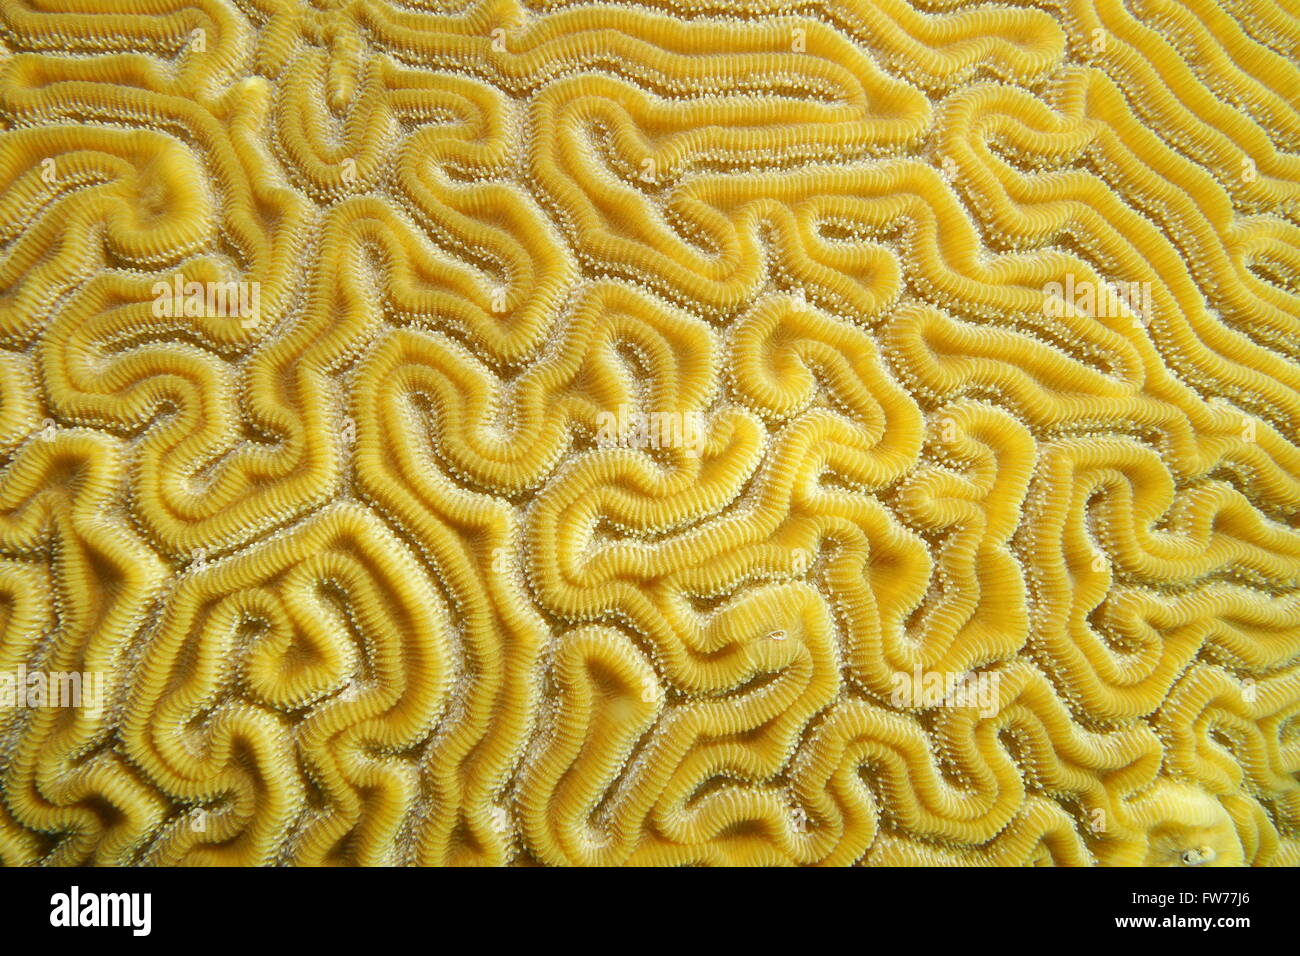 Underwater marine life, close up of grooved brain coral labyrinth, Diploria labyrinthiformis, Caribbean sea Stock Photo